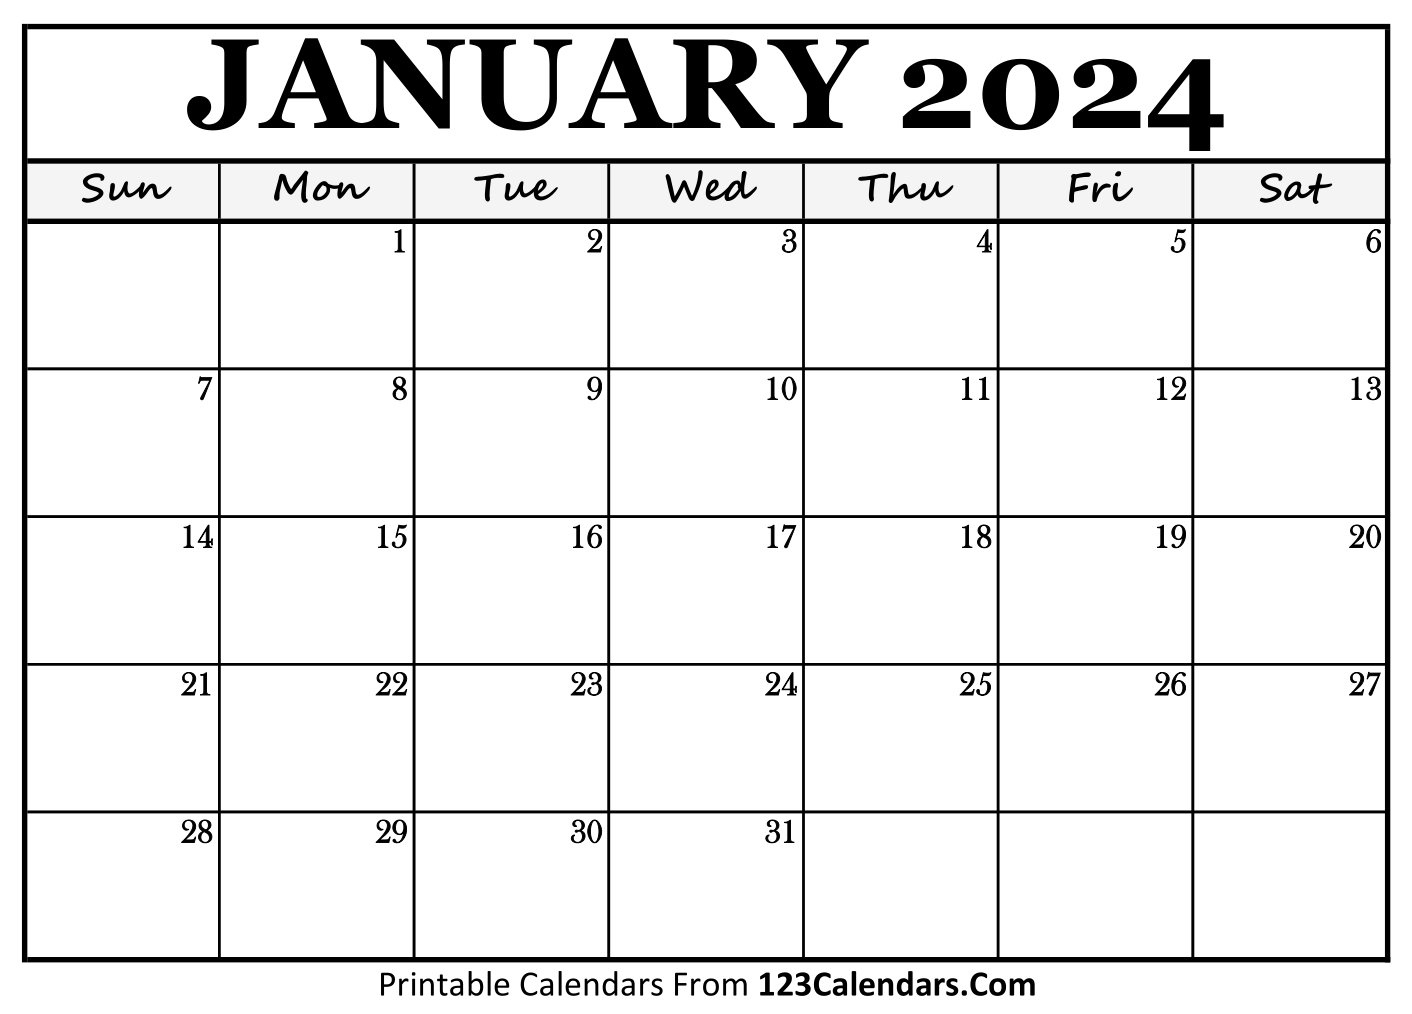 Printable January 2024 Calendar Templates - 123Calendars | January Printable Calendar 2024 Wiki